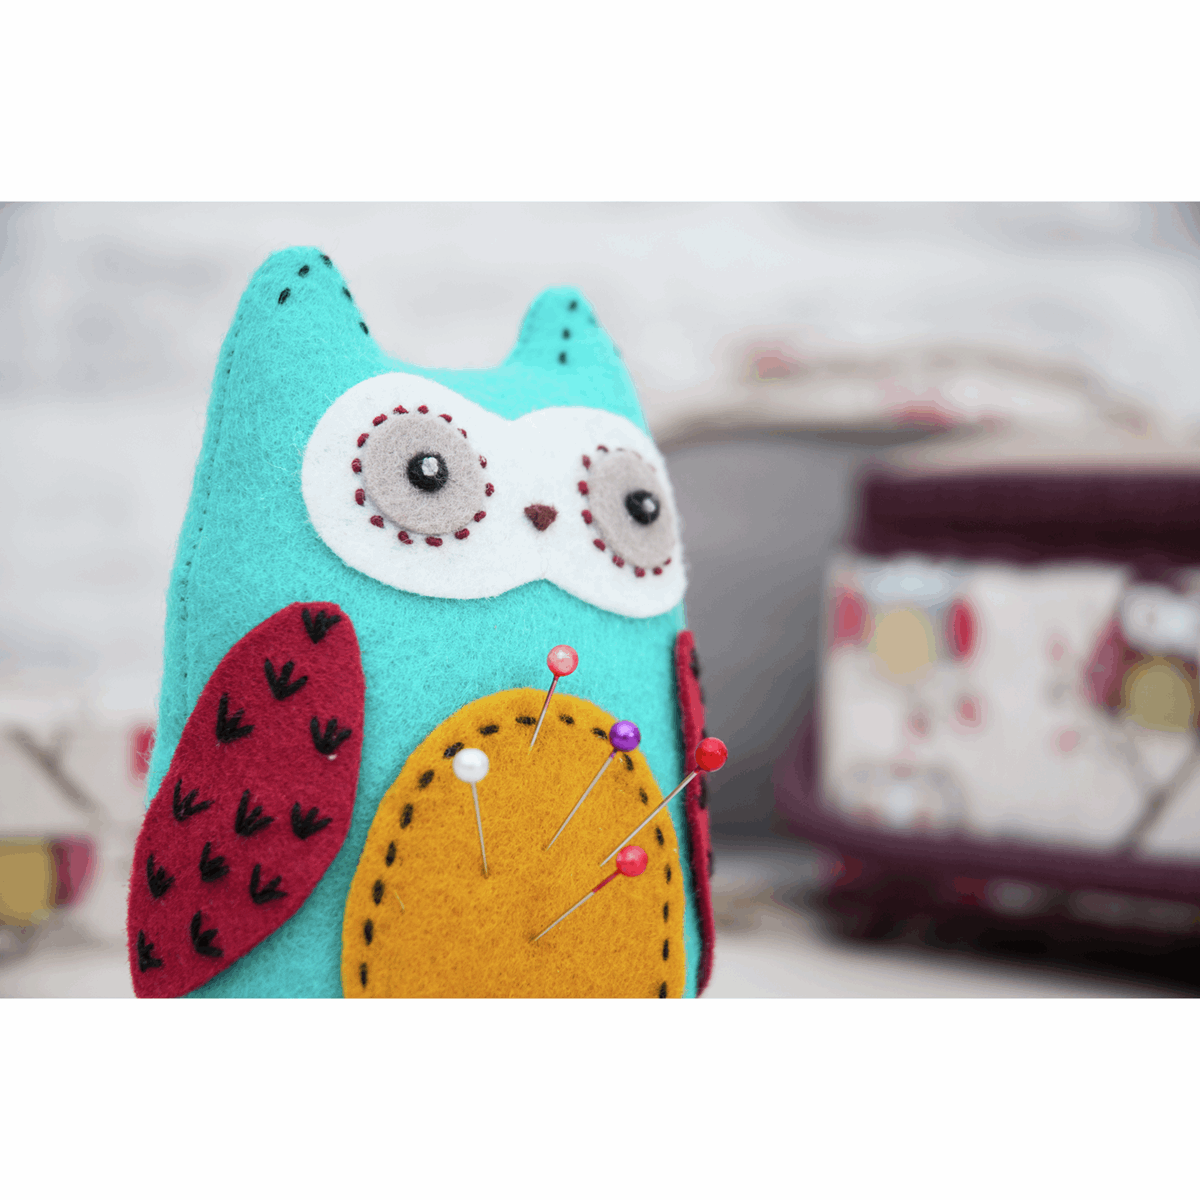 Owl Pincushion